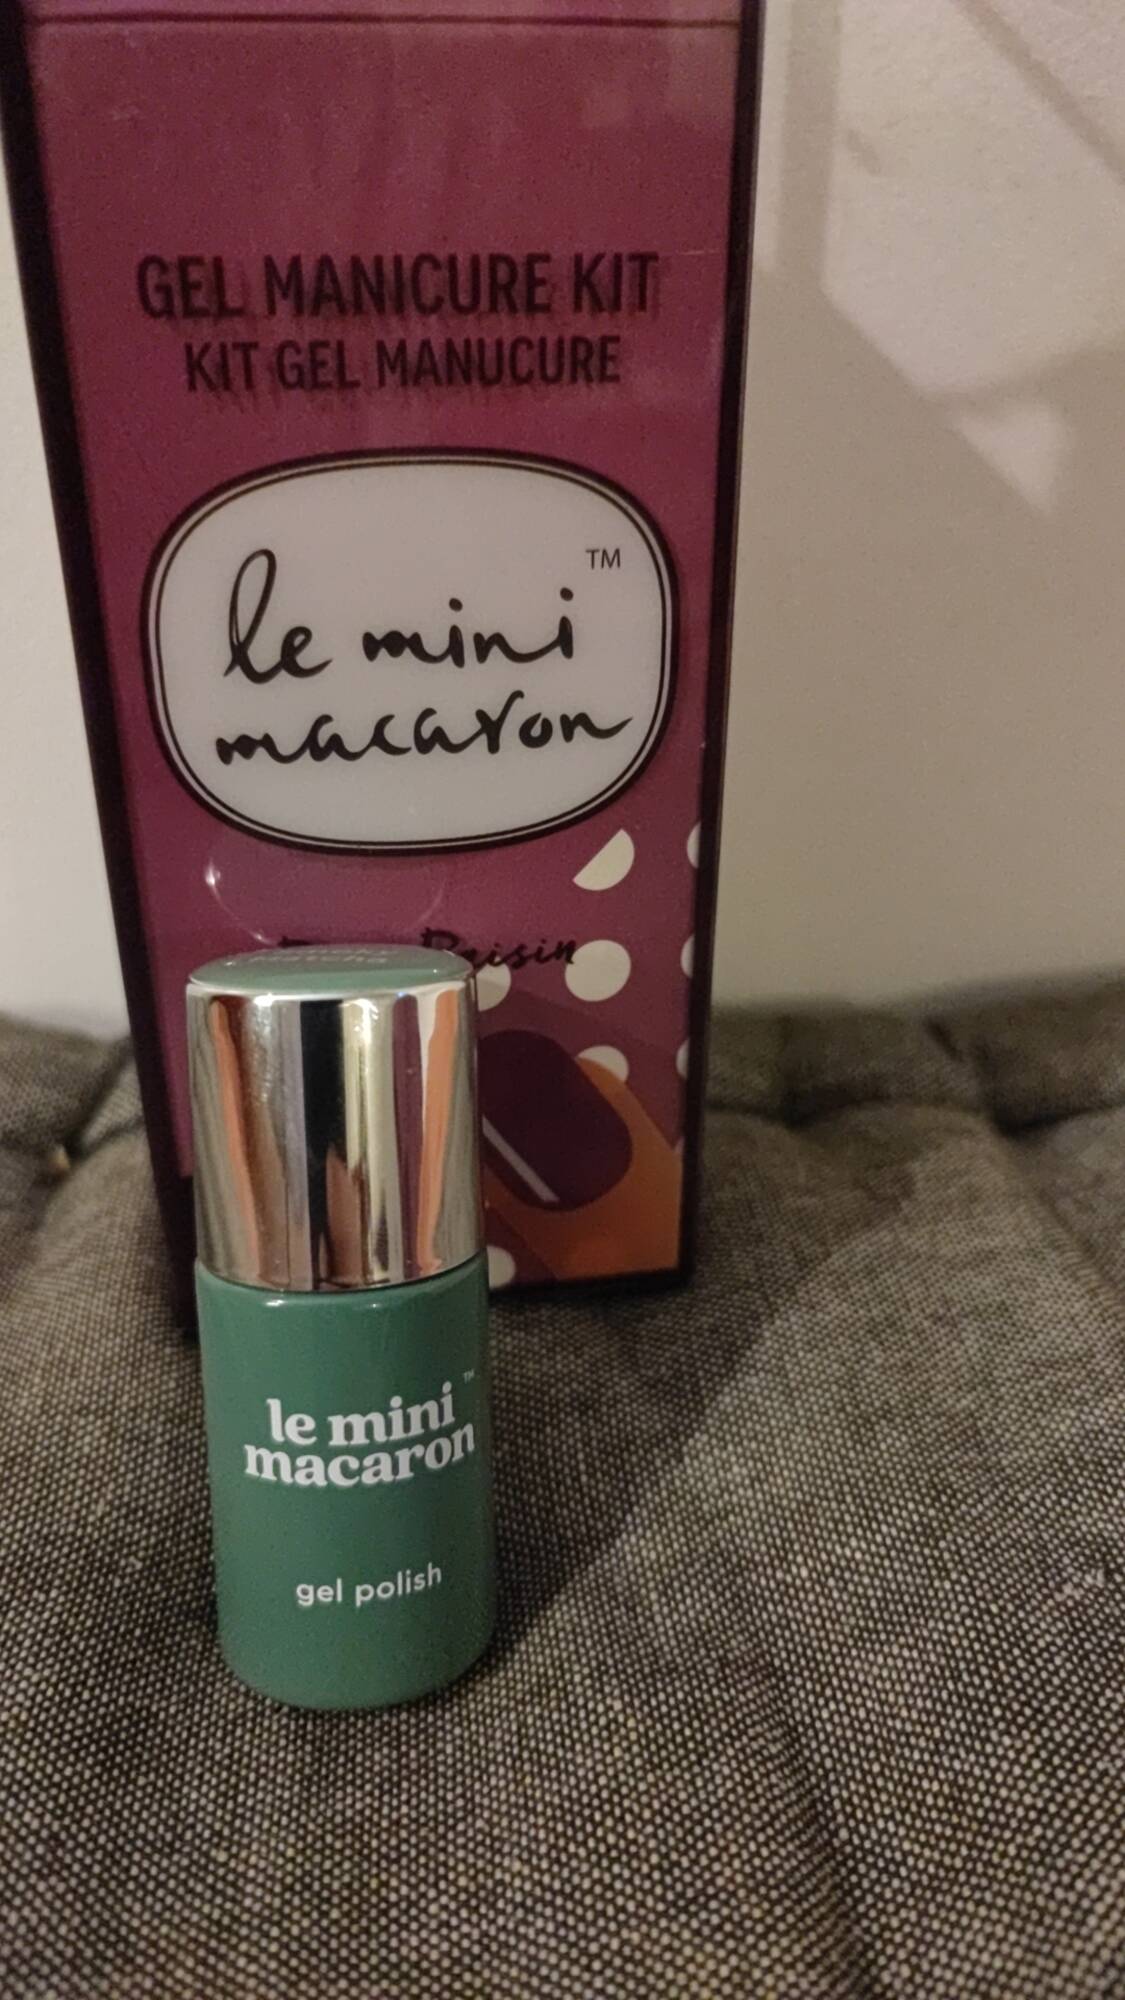 LE MINI MACARON - Gel manucure kit - Gel polish